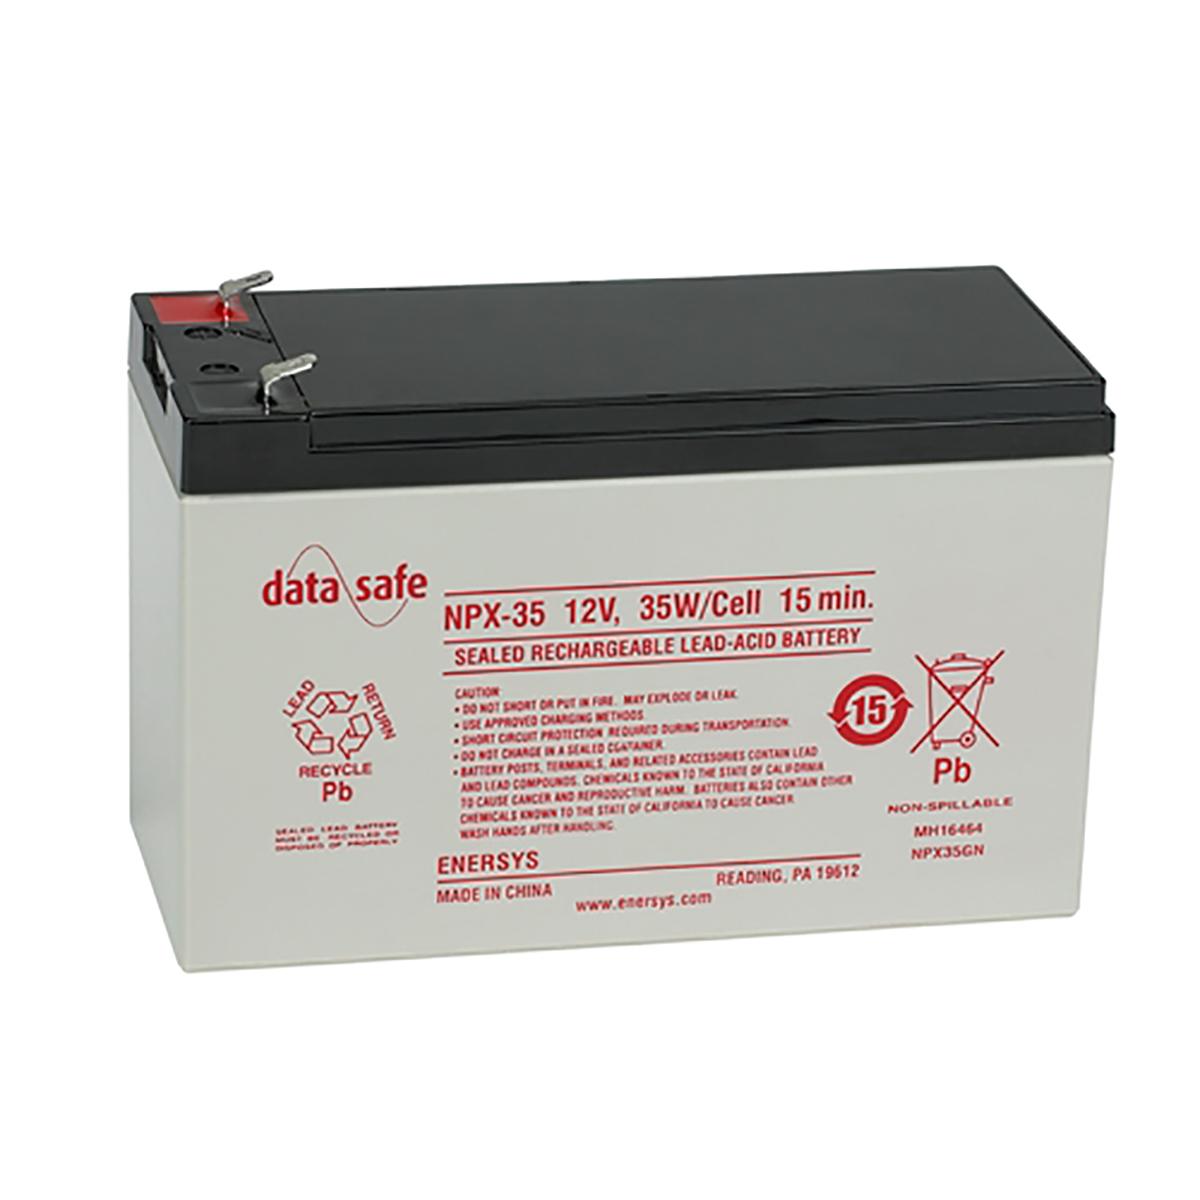 EnerSys DataSafe NPX-35TFR Sealed Lead Battery 12V 35W